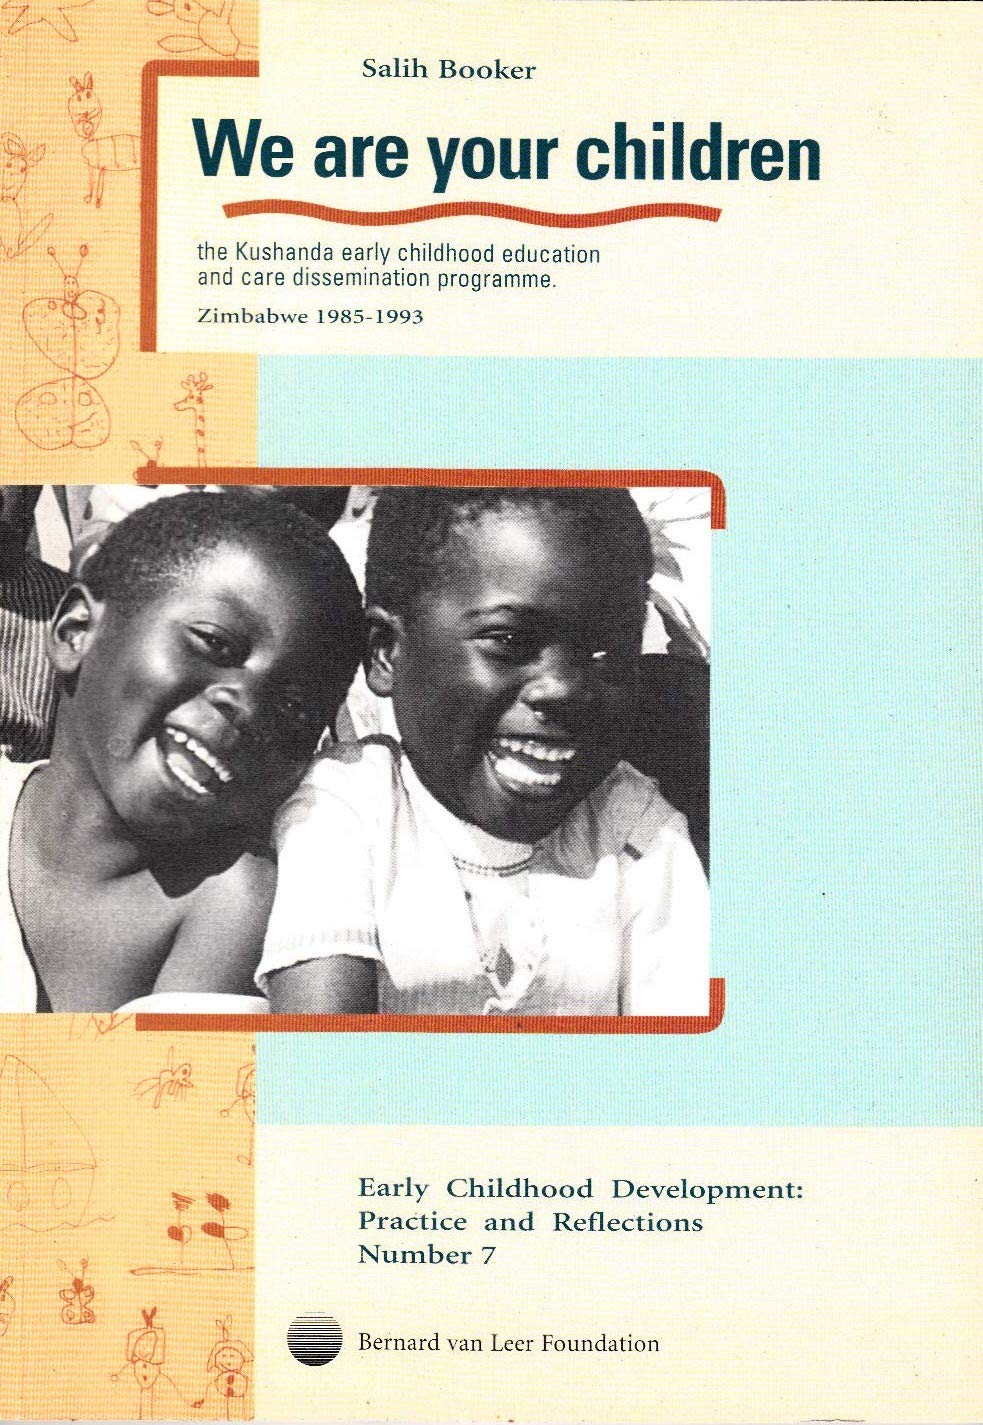 We Are Your Children: The Kushanda Early Childhood Education and Care Dissemination Programme, Zimbabwe 1985-1993